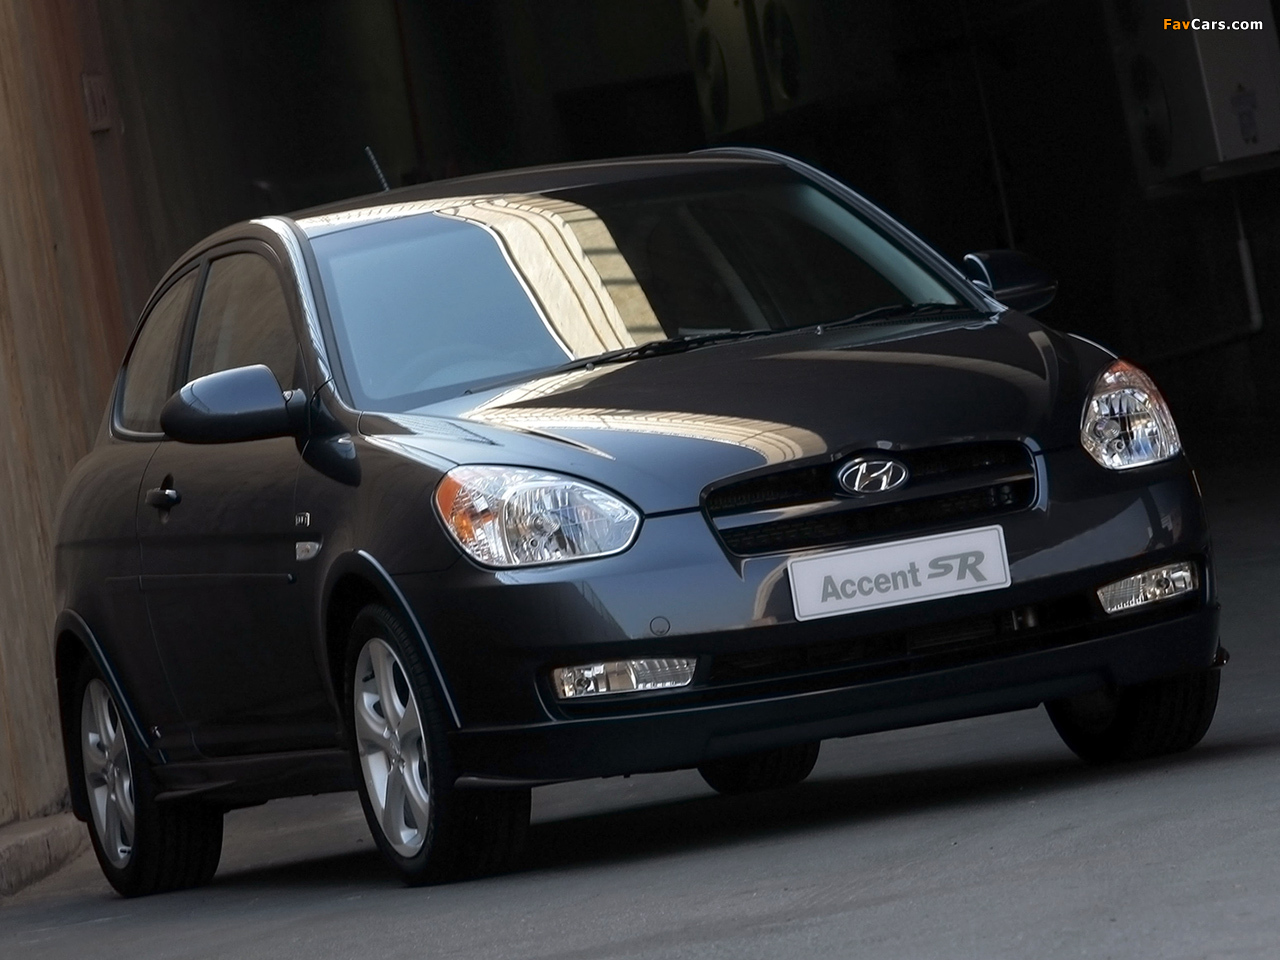 Hyundai Accent SR 3-door 2008 pictures (1280 x 960)